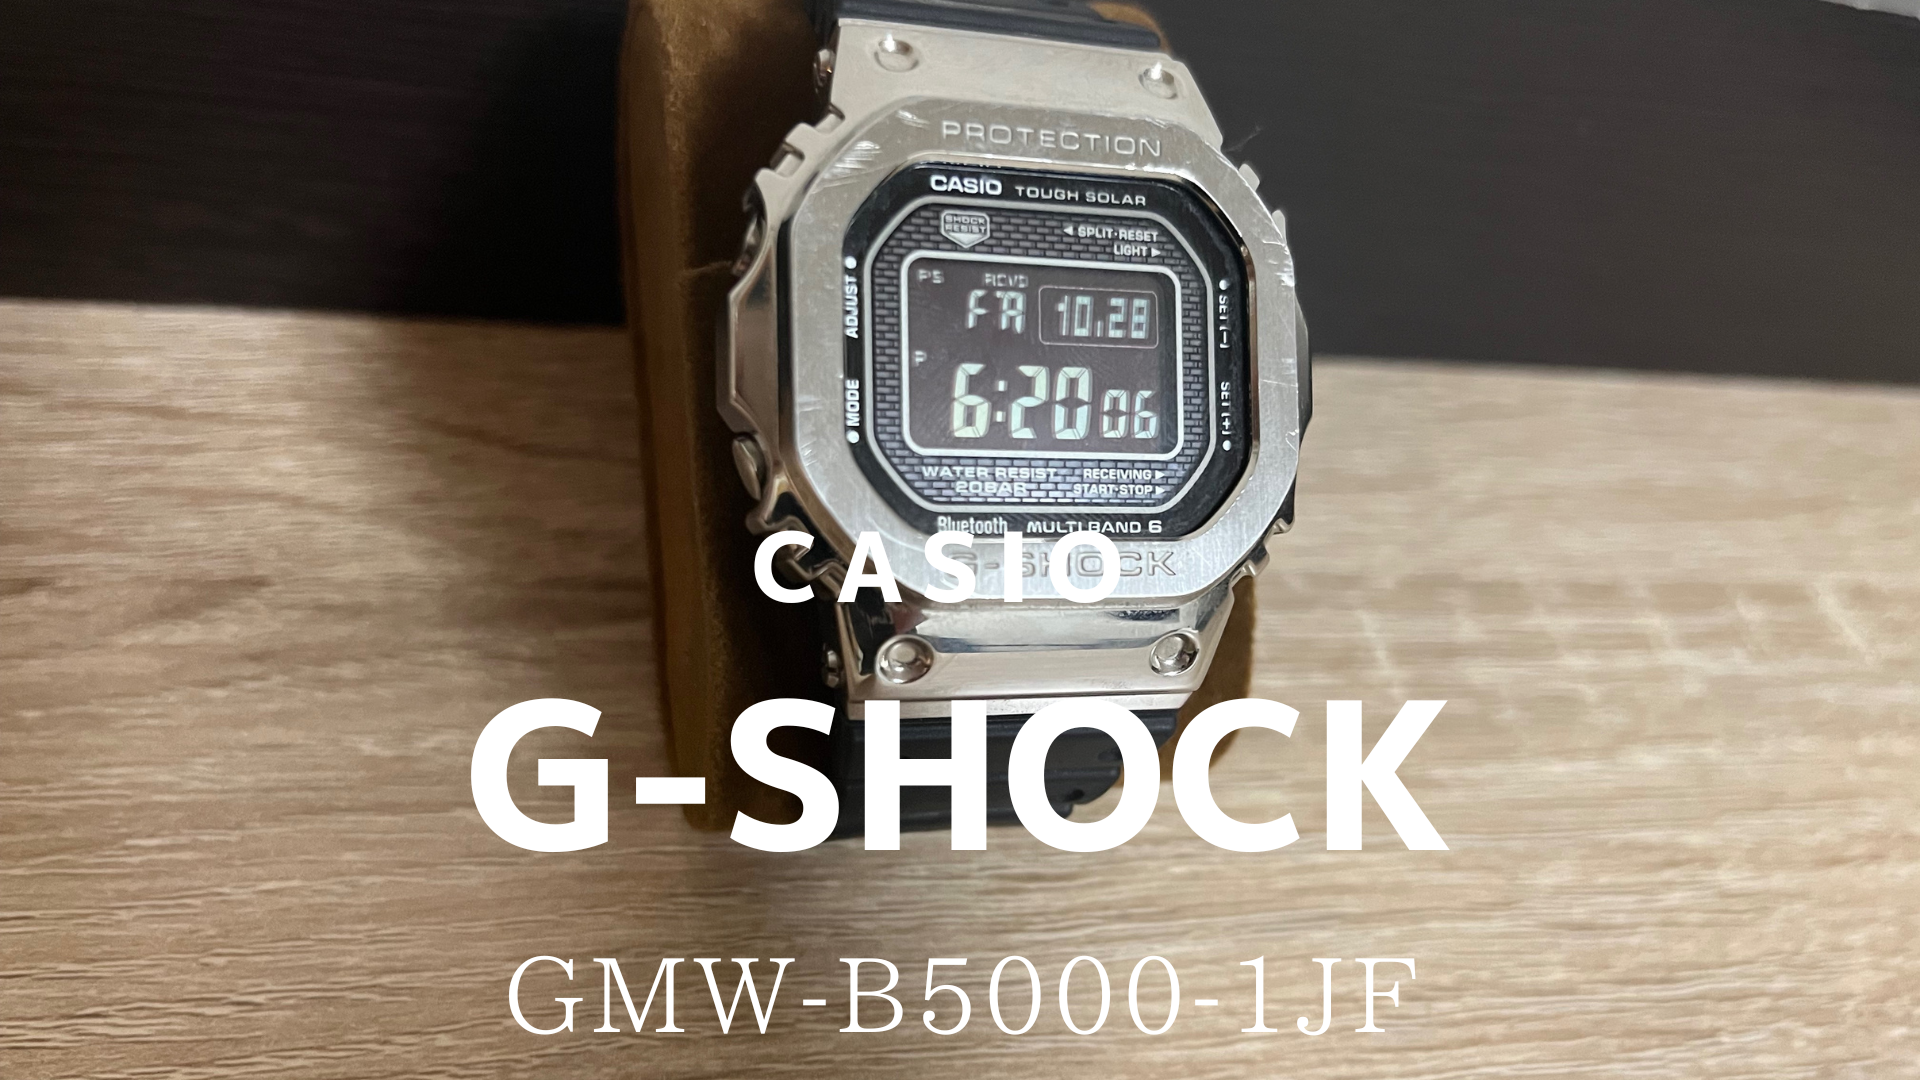 CASIO G-SHOCK GMW-B5000-1JF レビュー | Jun Stroll Blog